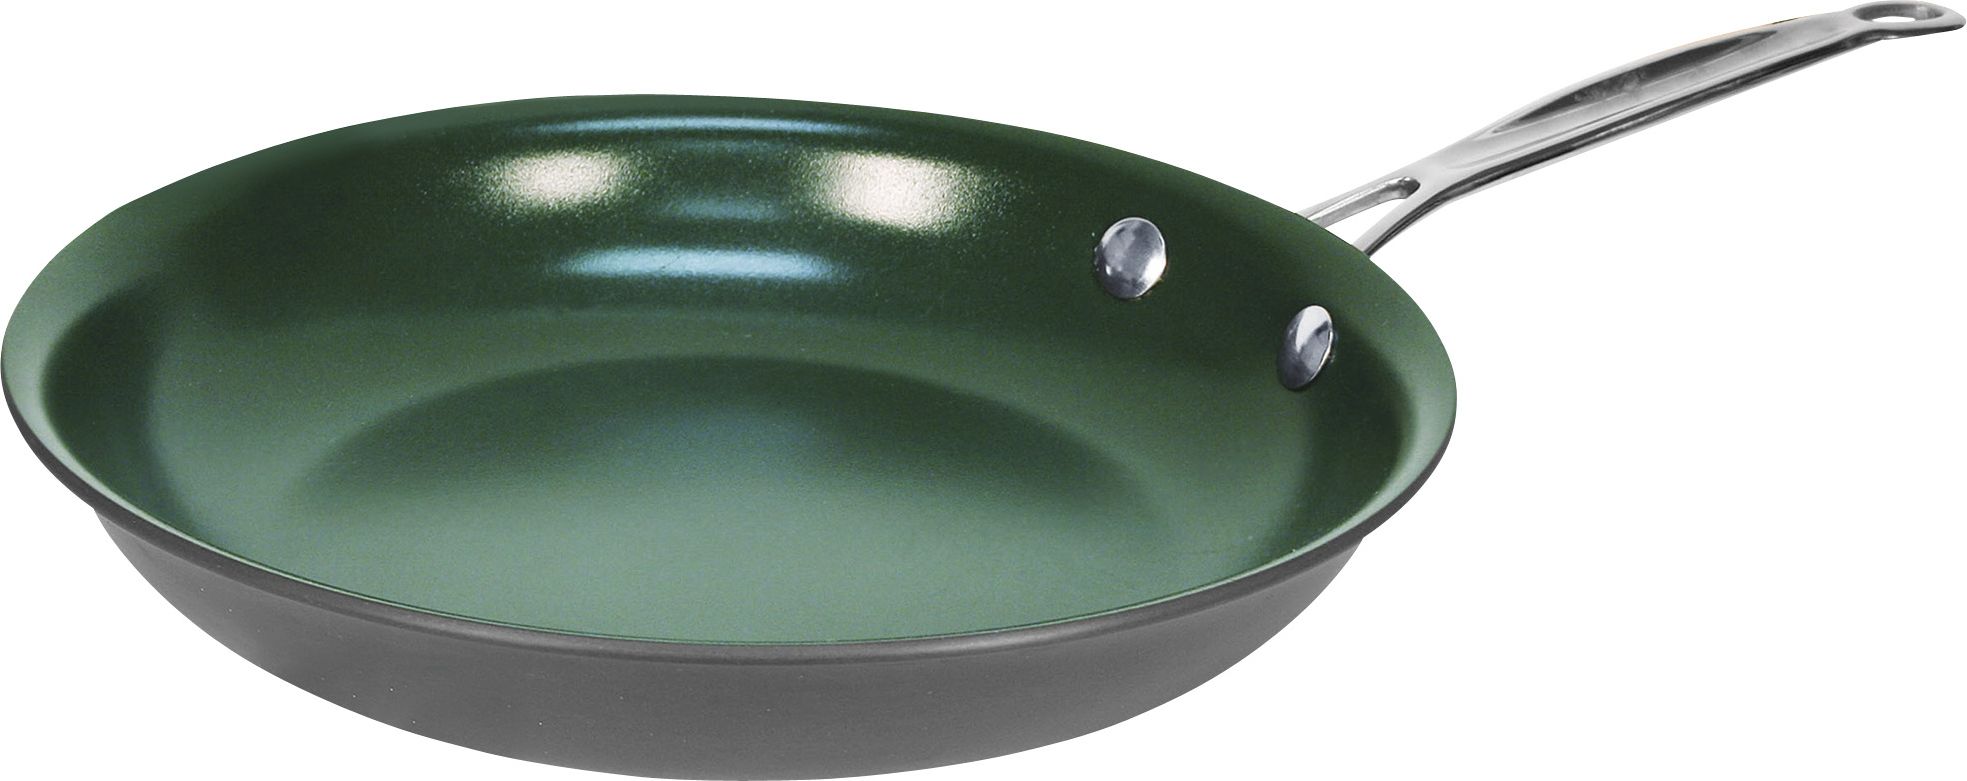 OrGreenic, Kitchen, Orgreenic Fry Pan Kitchenware Ceramic Green Nonstick  Fry Pan